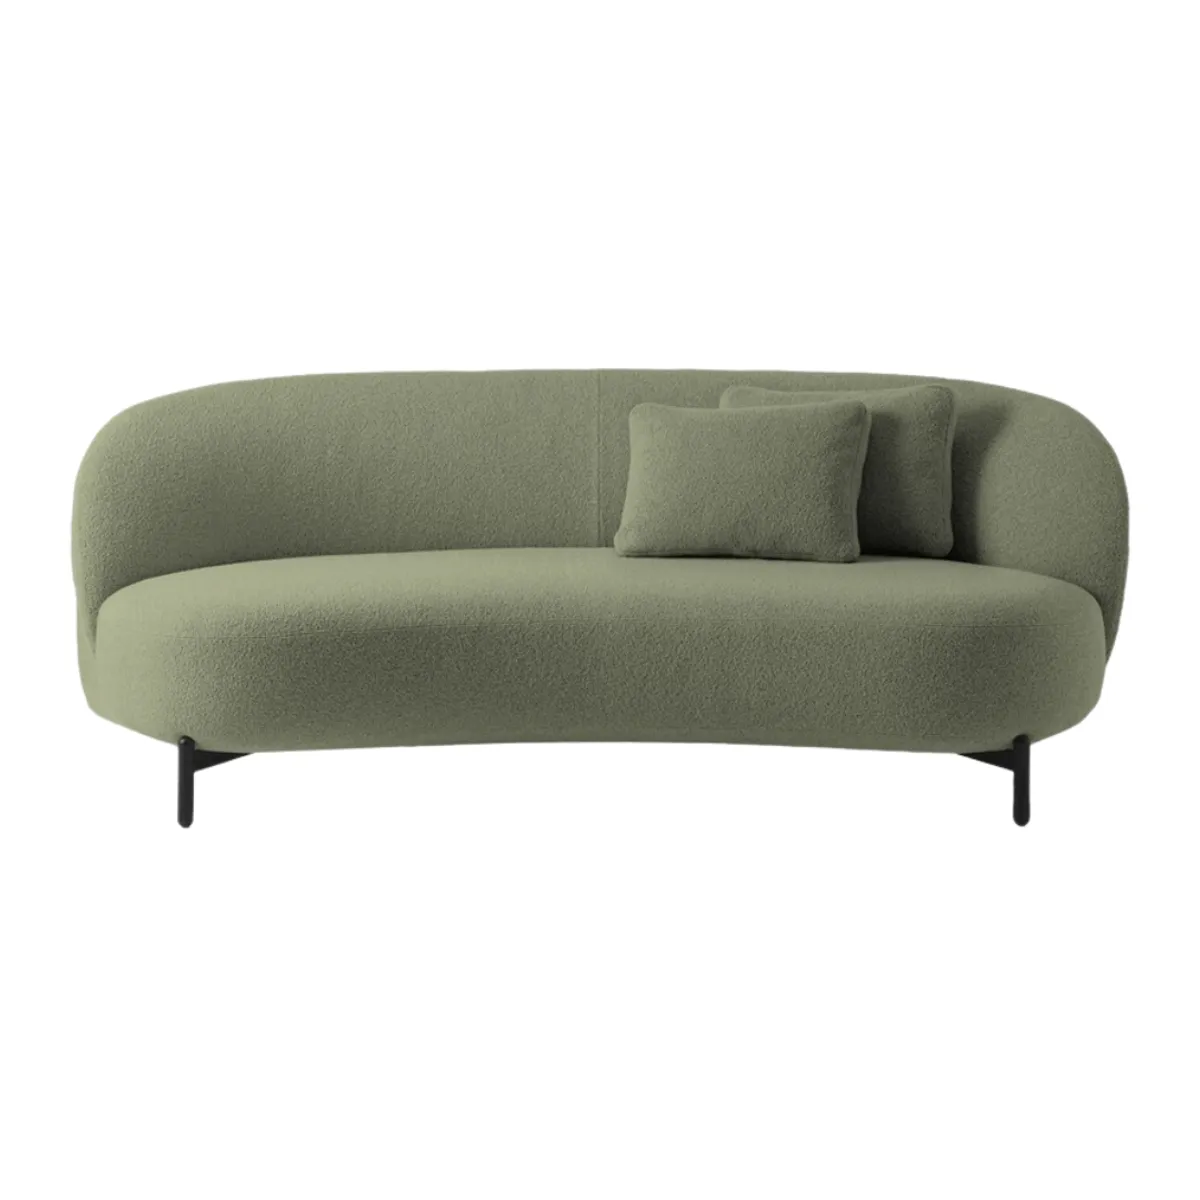 Kingsley sofa 3